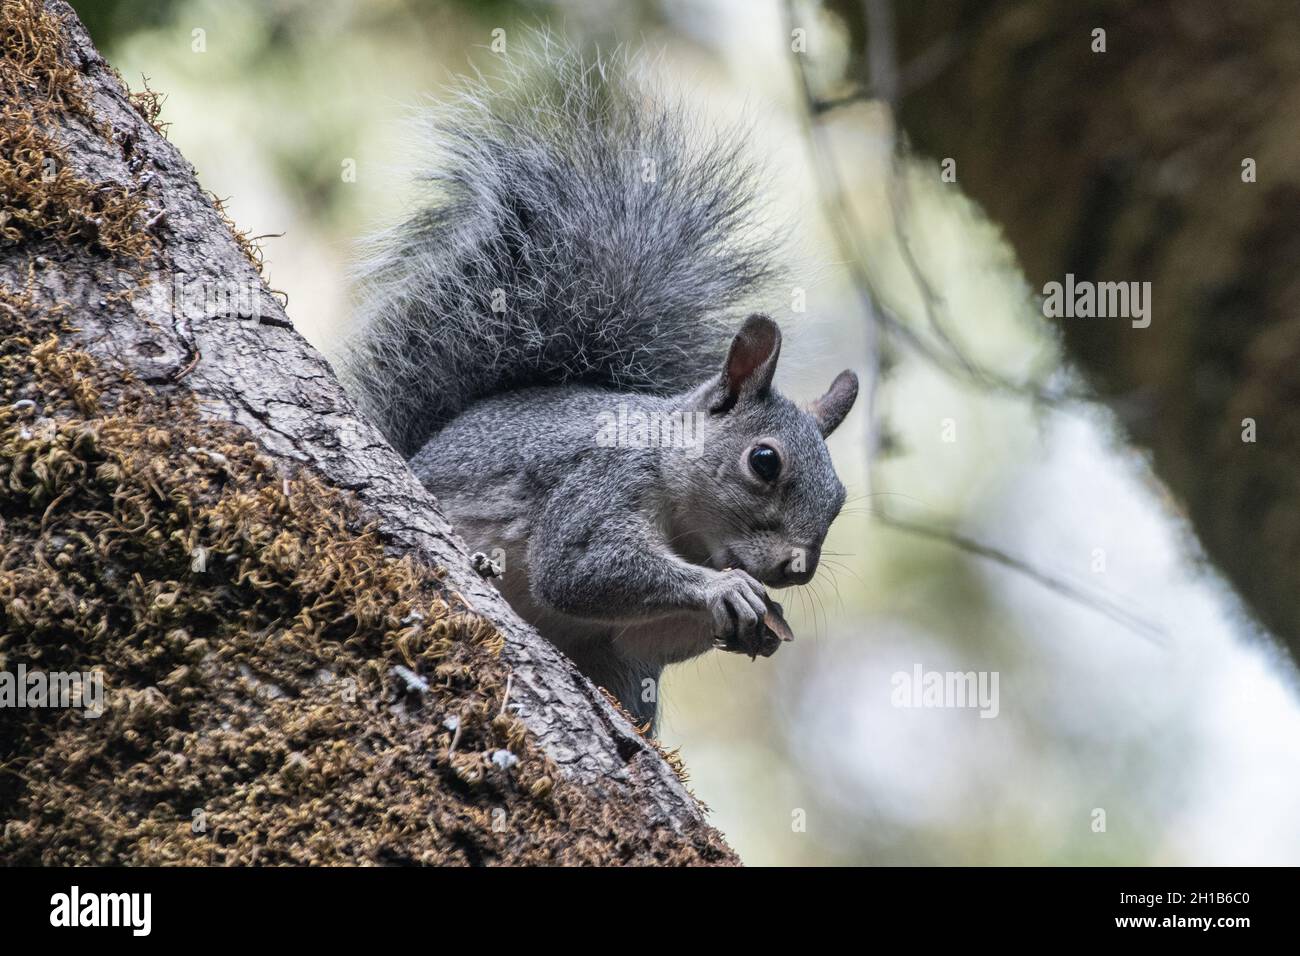 A western gray squirrel (Sciurus griseus) from Sonoma county, California. Stock Photo